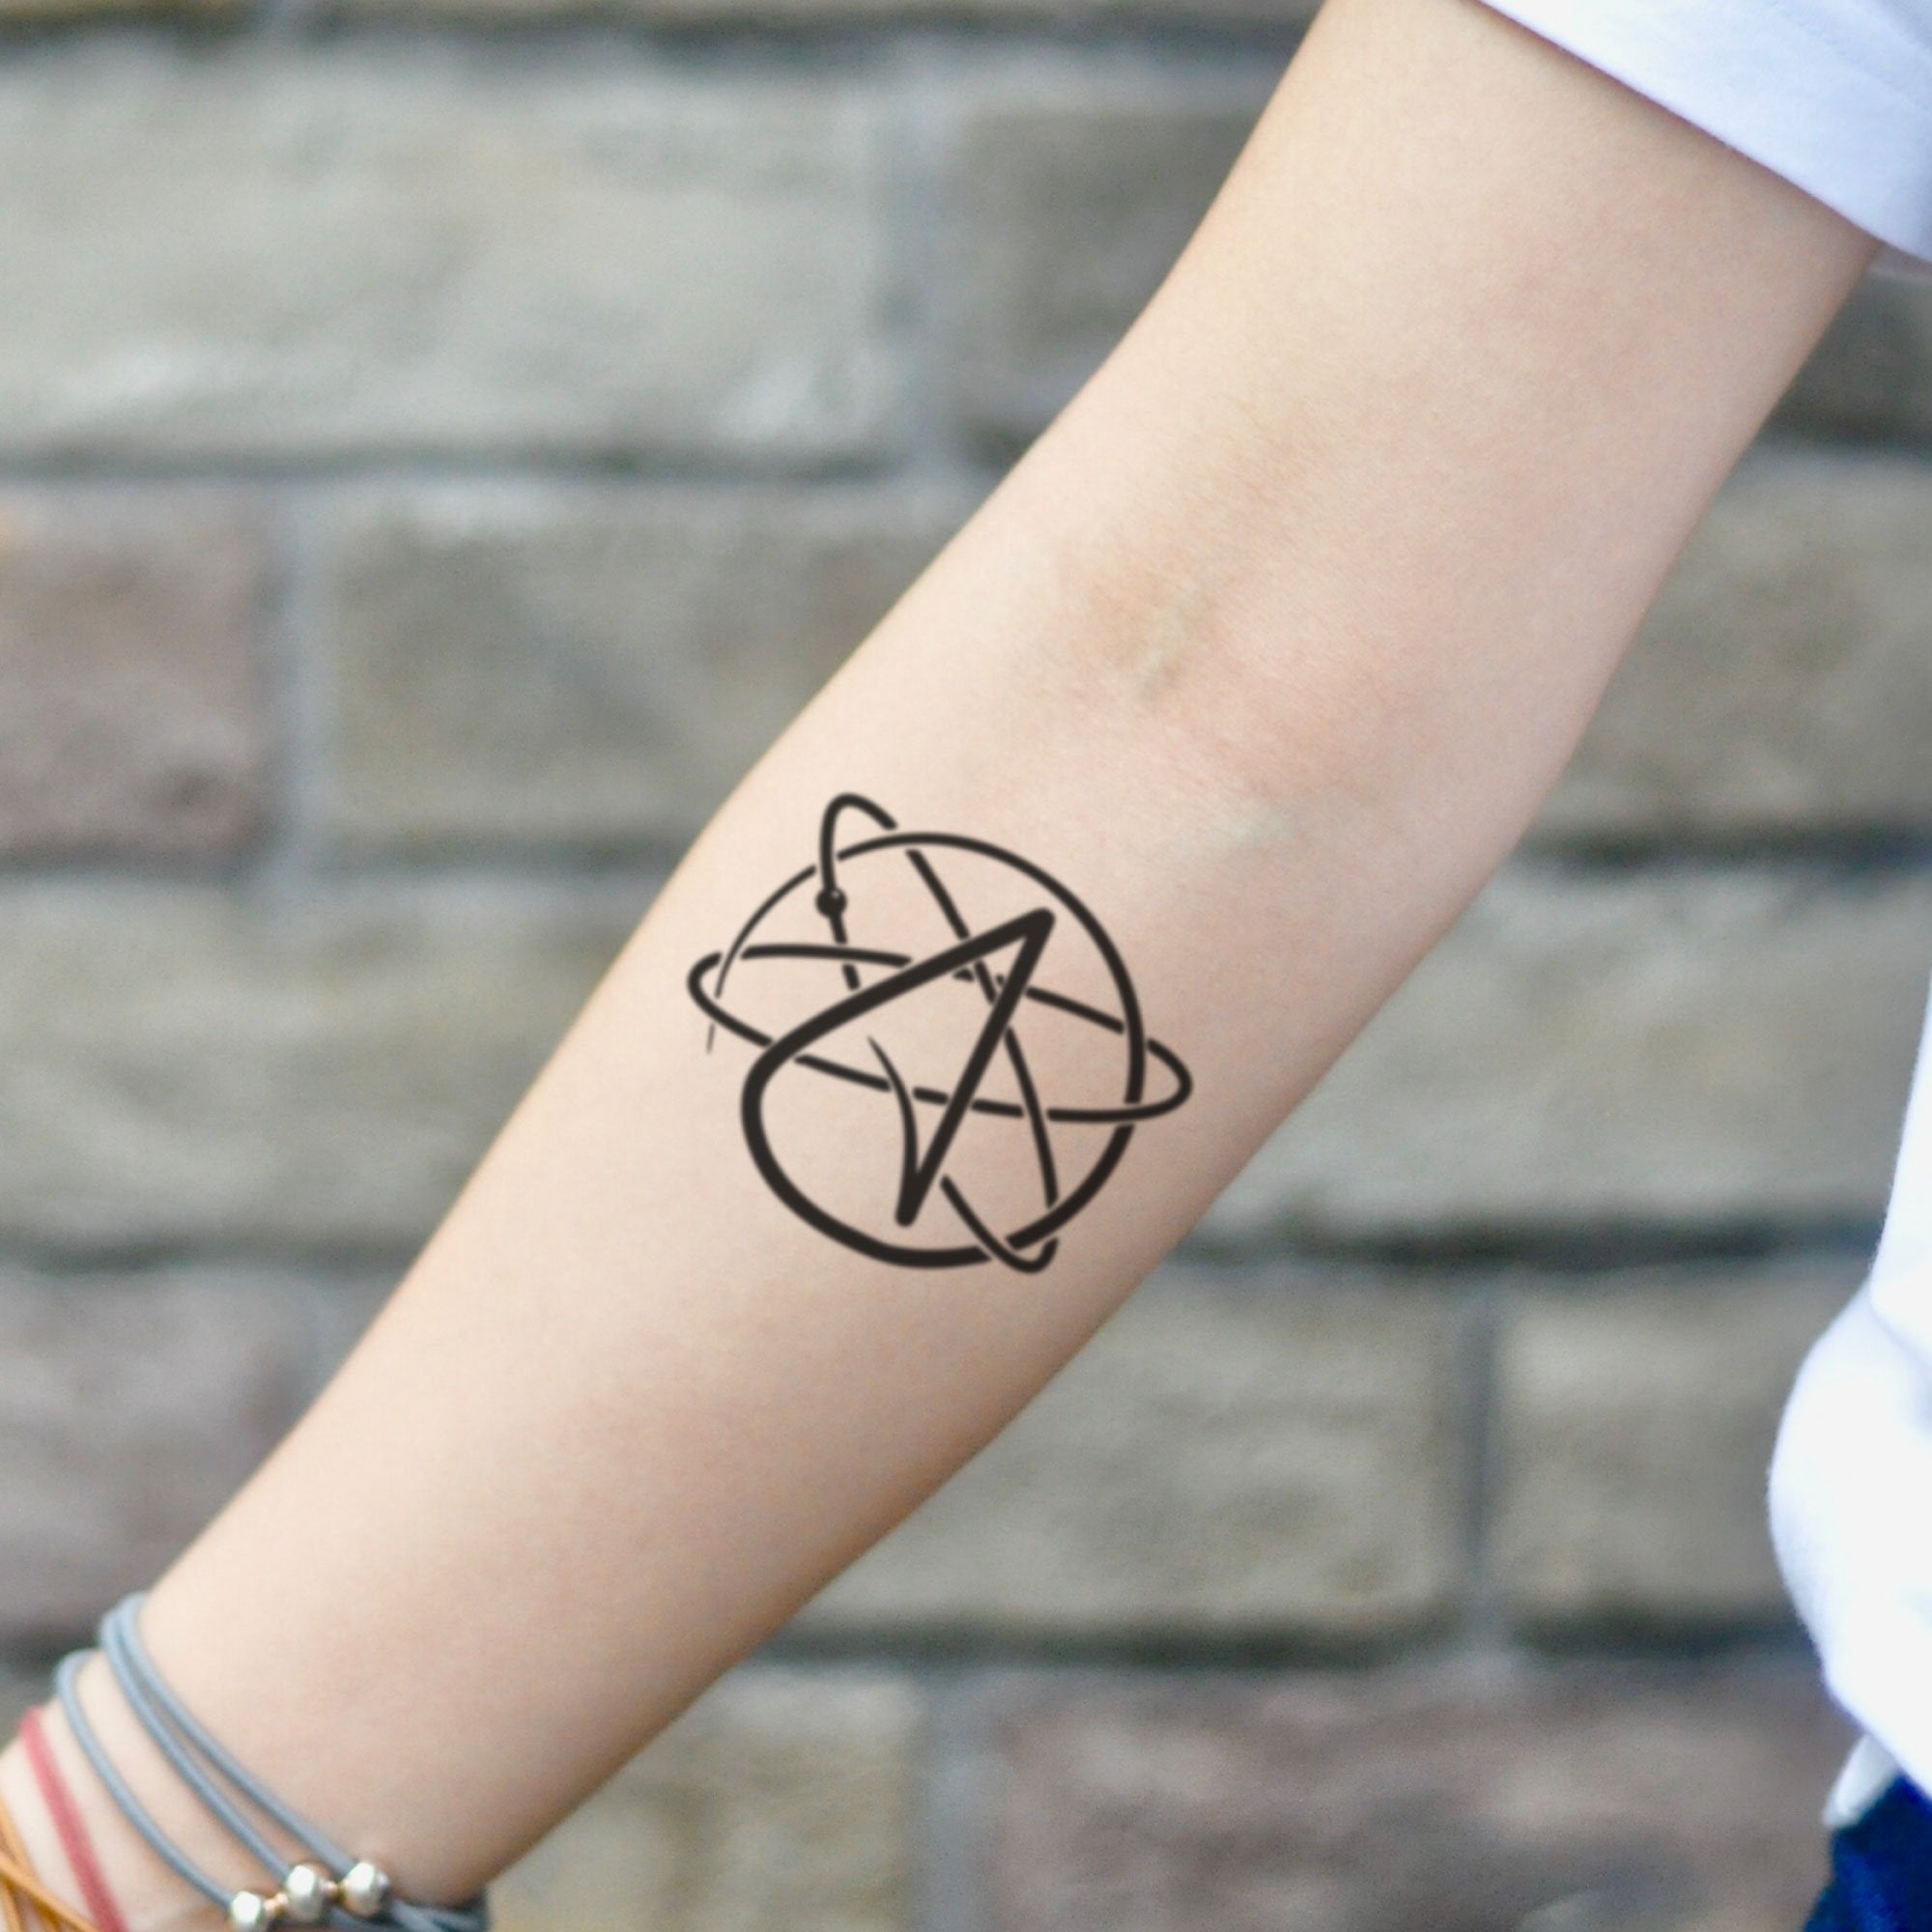 Atheist tattoo designs